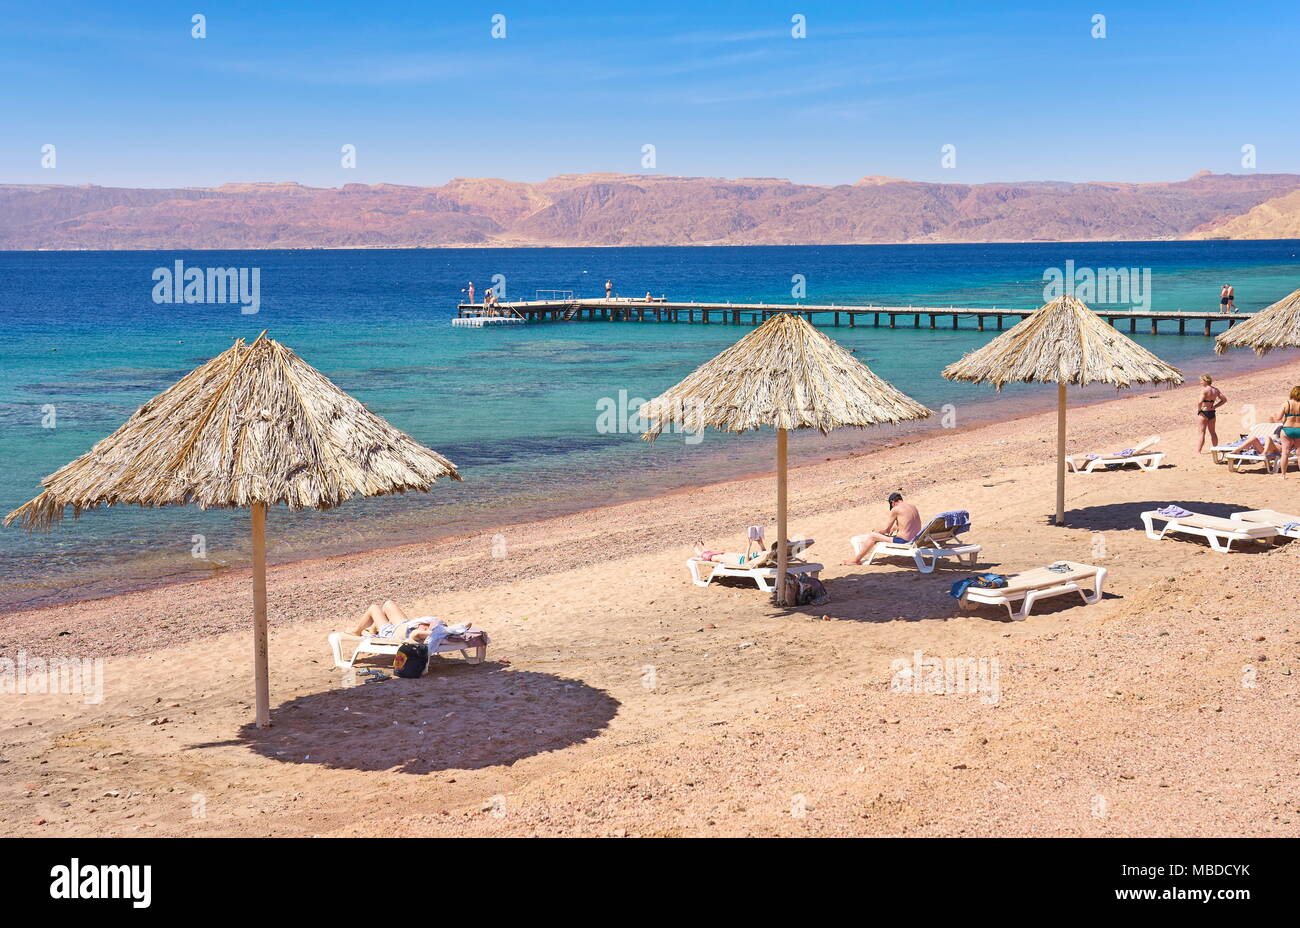 Beach resort Berenice, Aqaba, Jordanie Banque D'Images